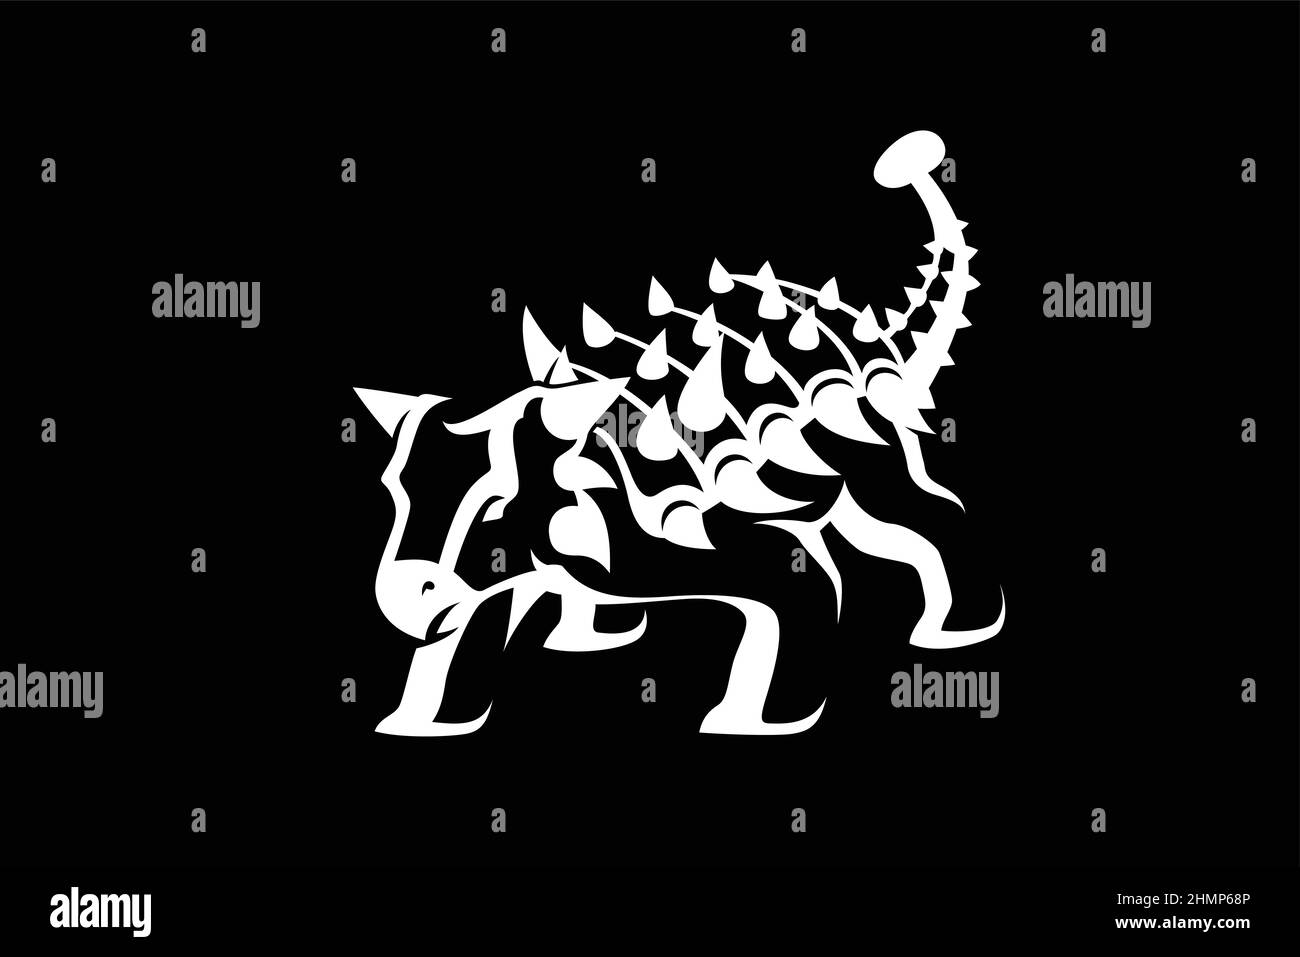 Simple Design Ankylosaurus with Monochrome Stencil Stock Vector